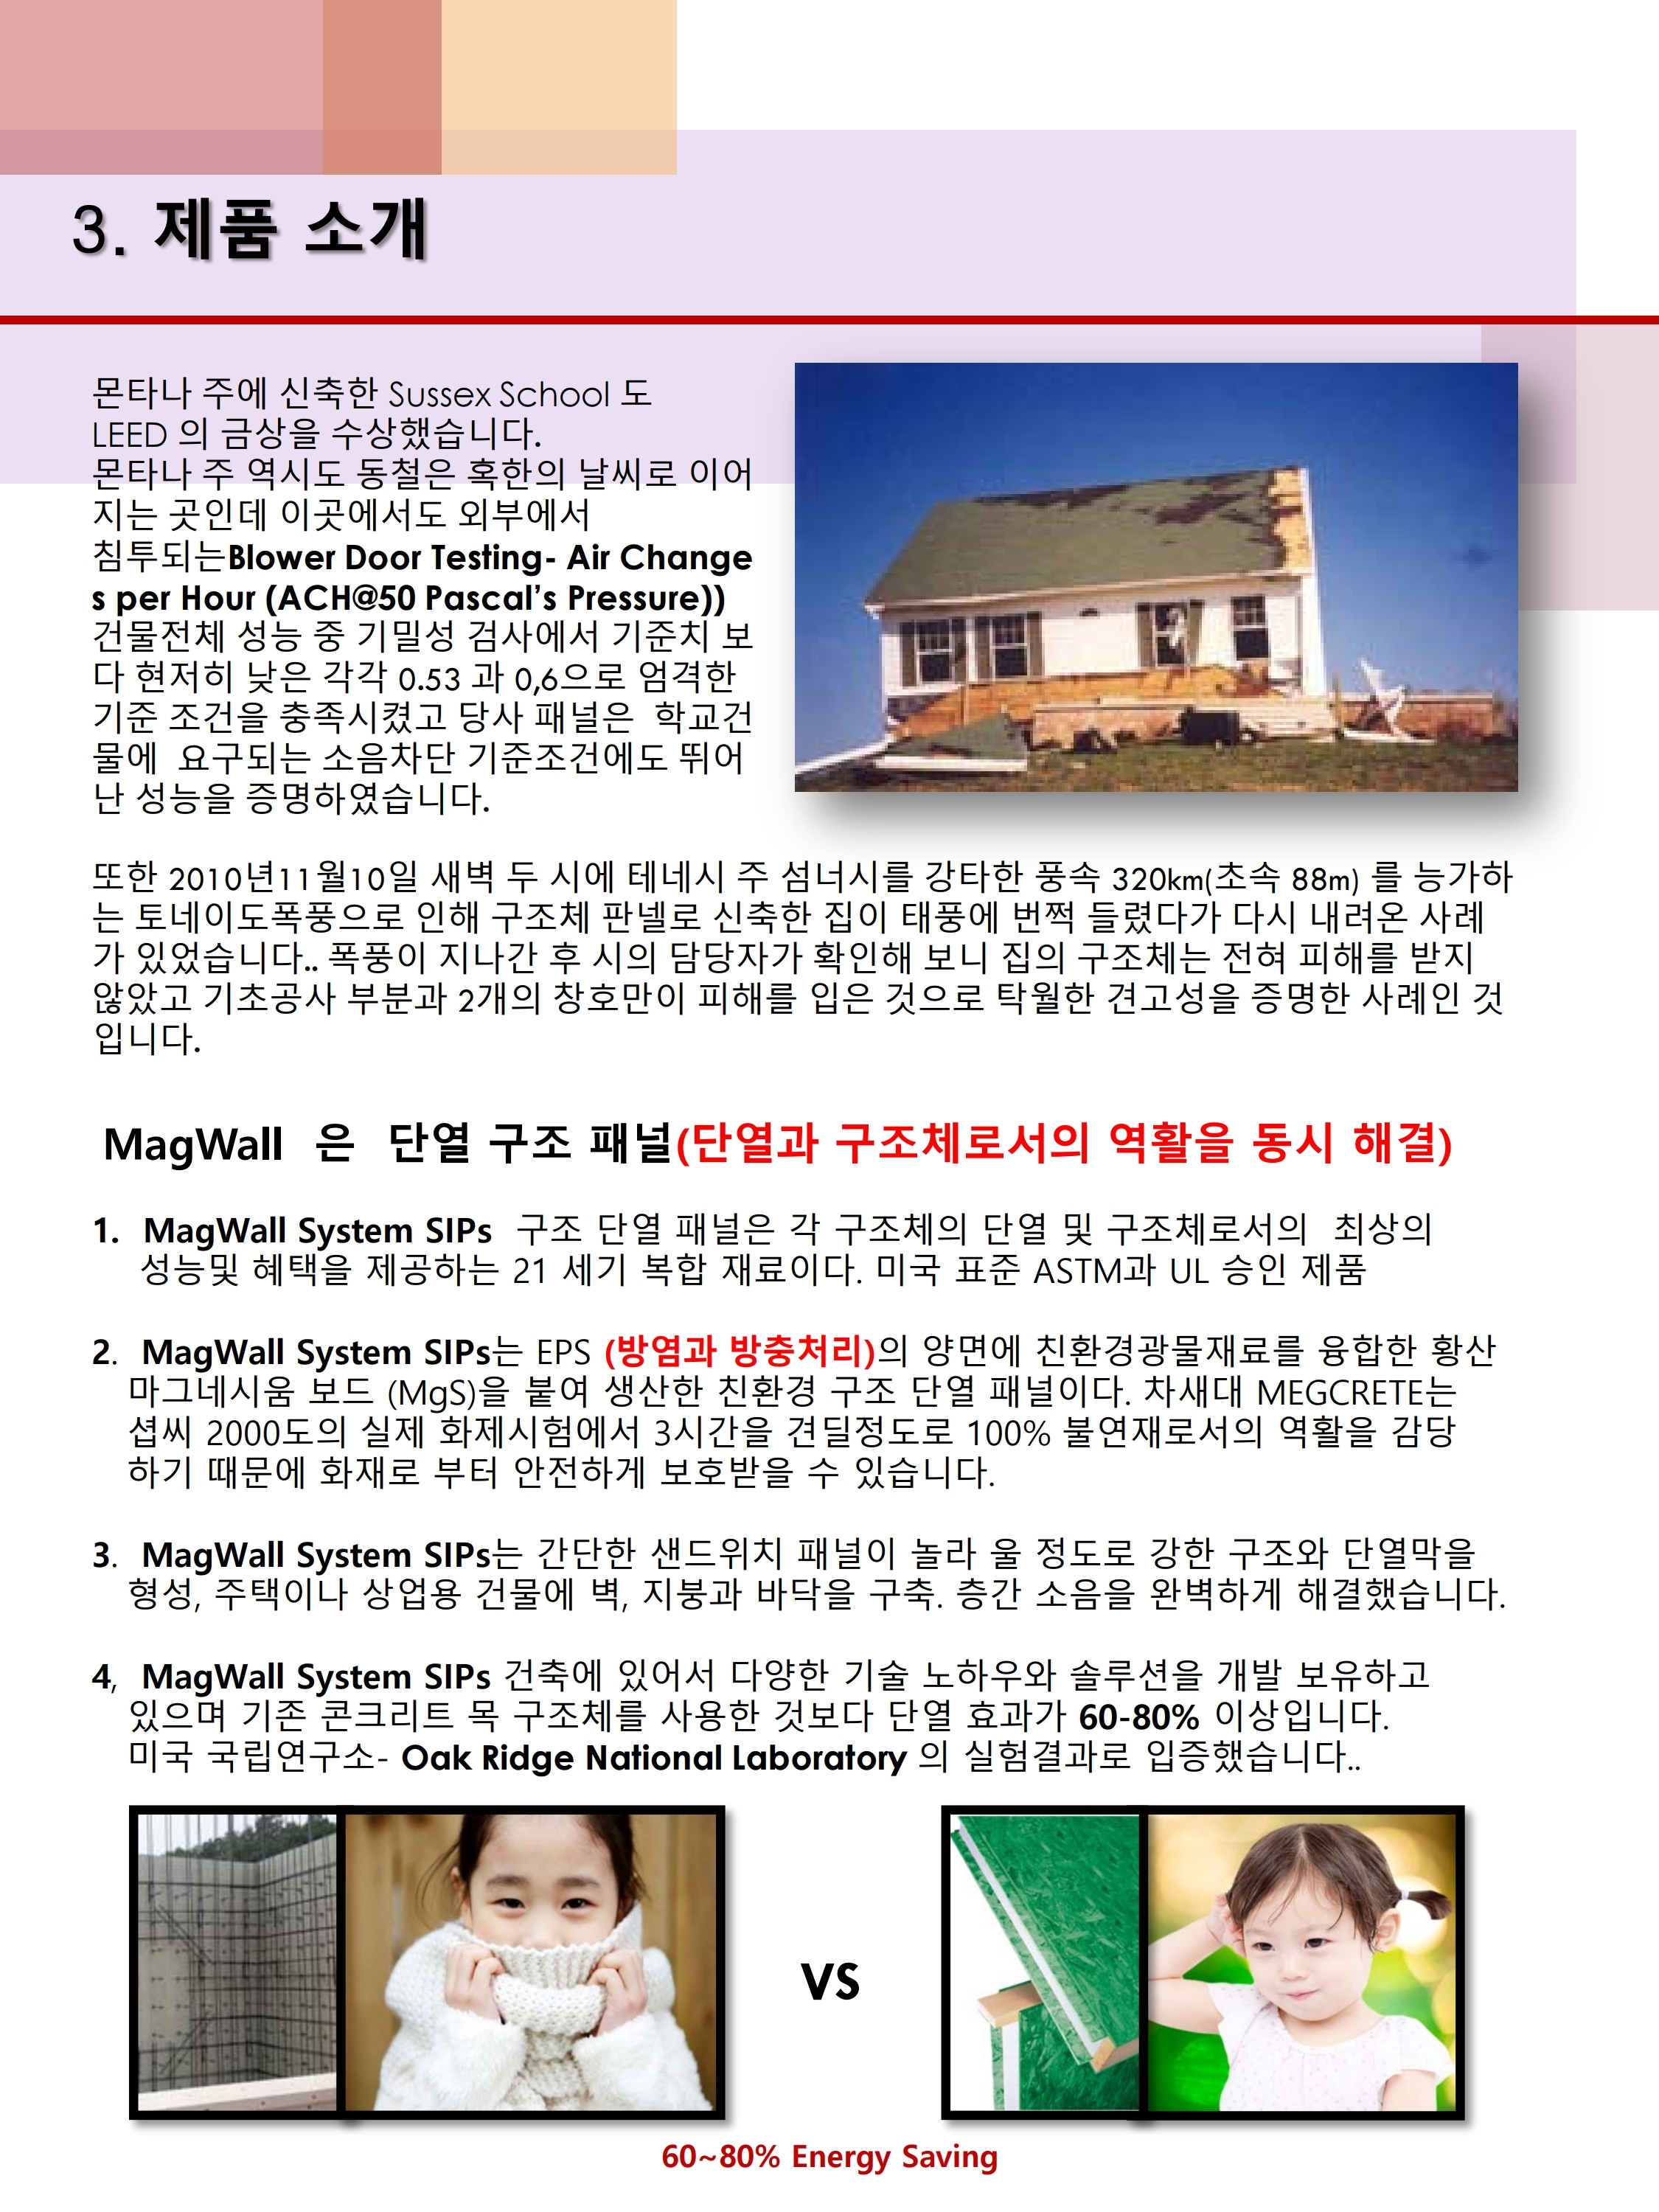 MagWall Korea_2019-11_page_11.jpg